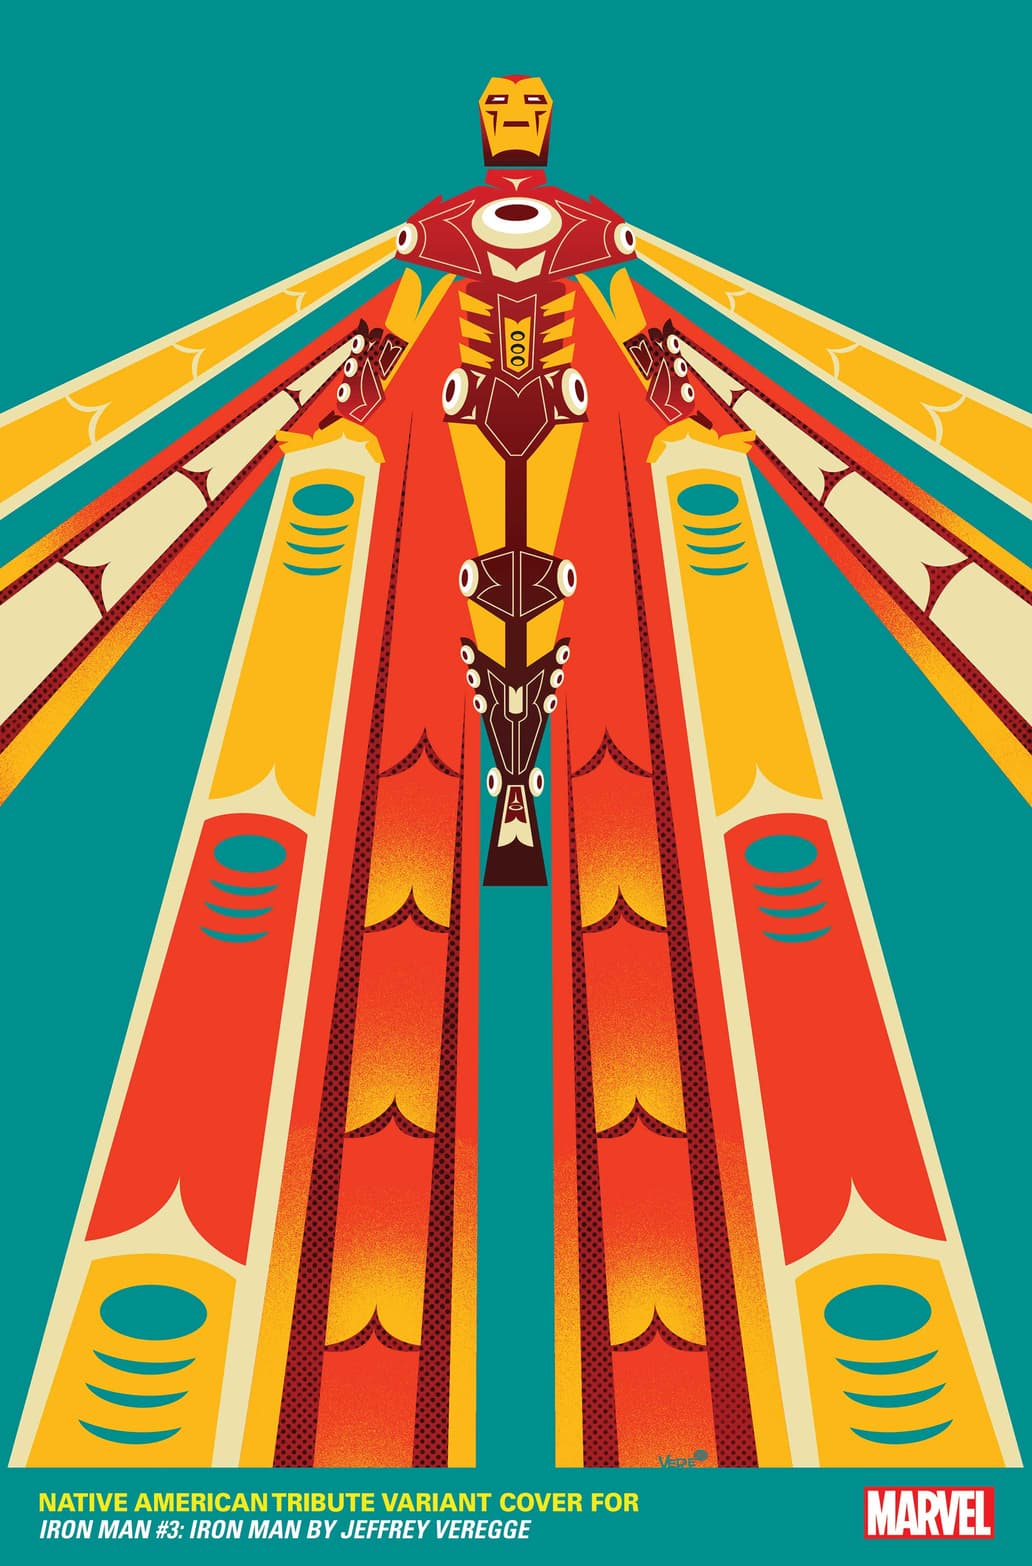 Native American variant by Jeffrey Veregge